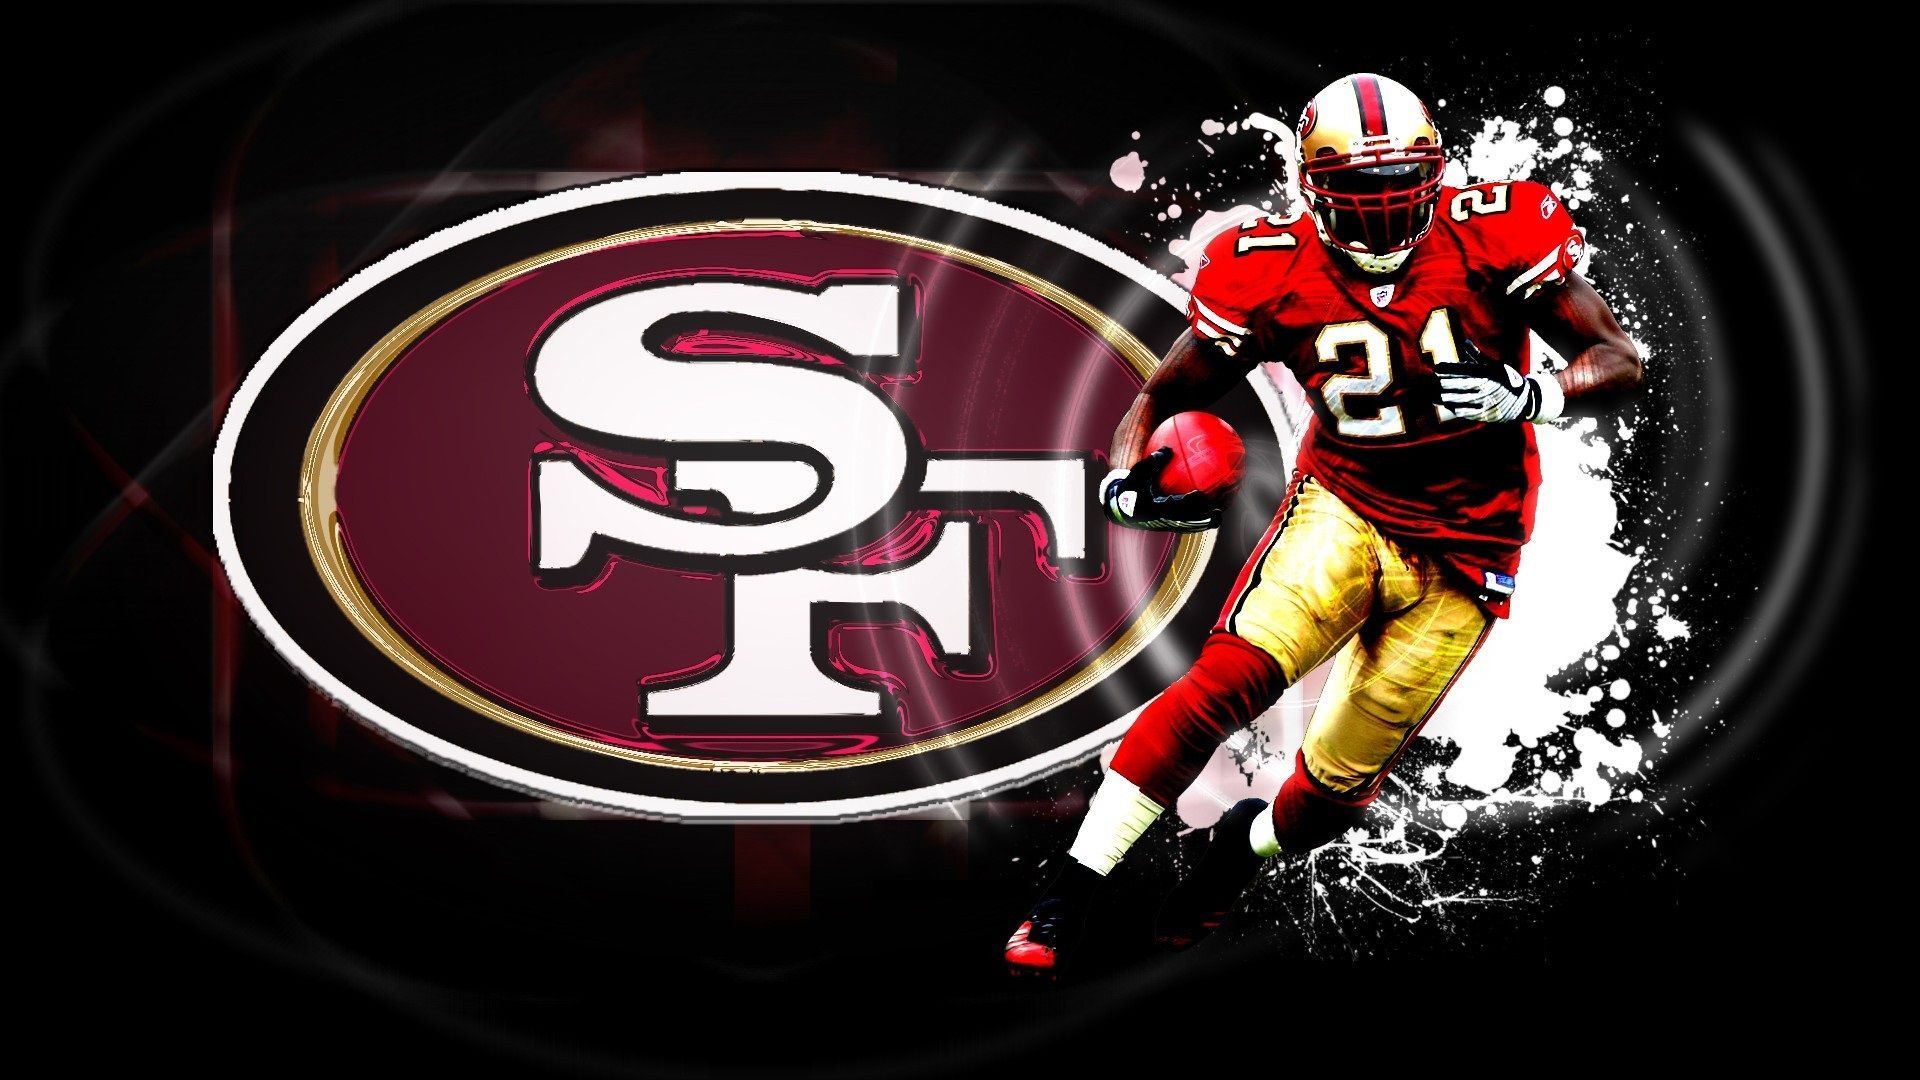 HD San Francisco 49ers Background NFL Football Wallpaper. San francisco 49ers, 49ers, San francisco 49ers logo